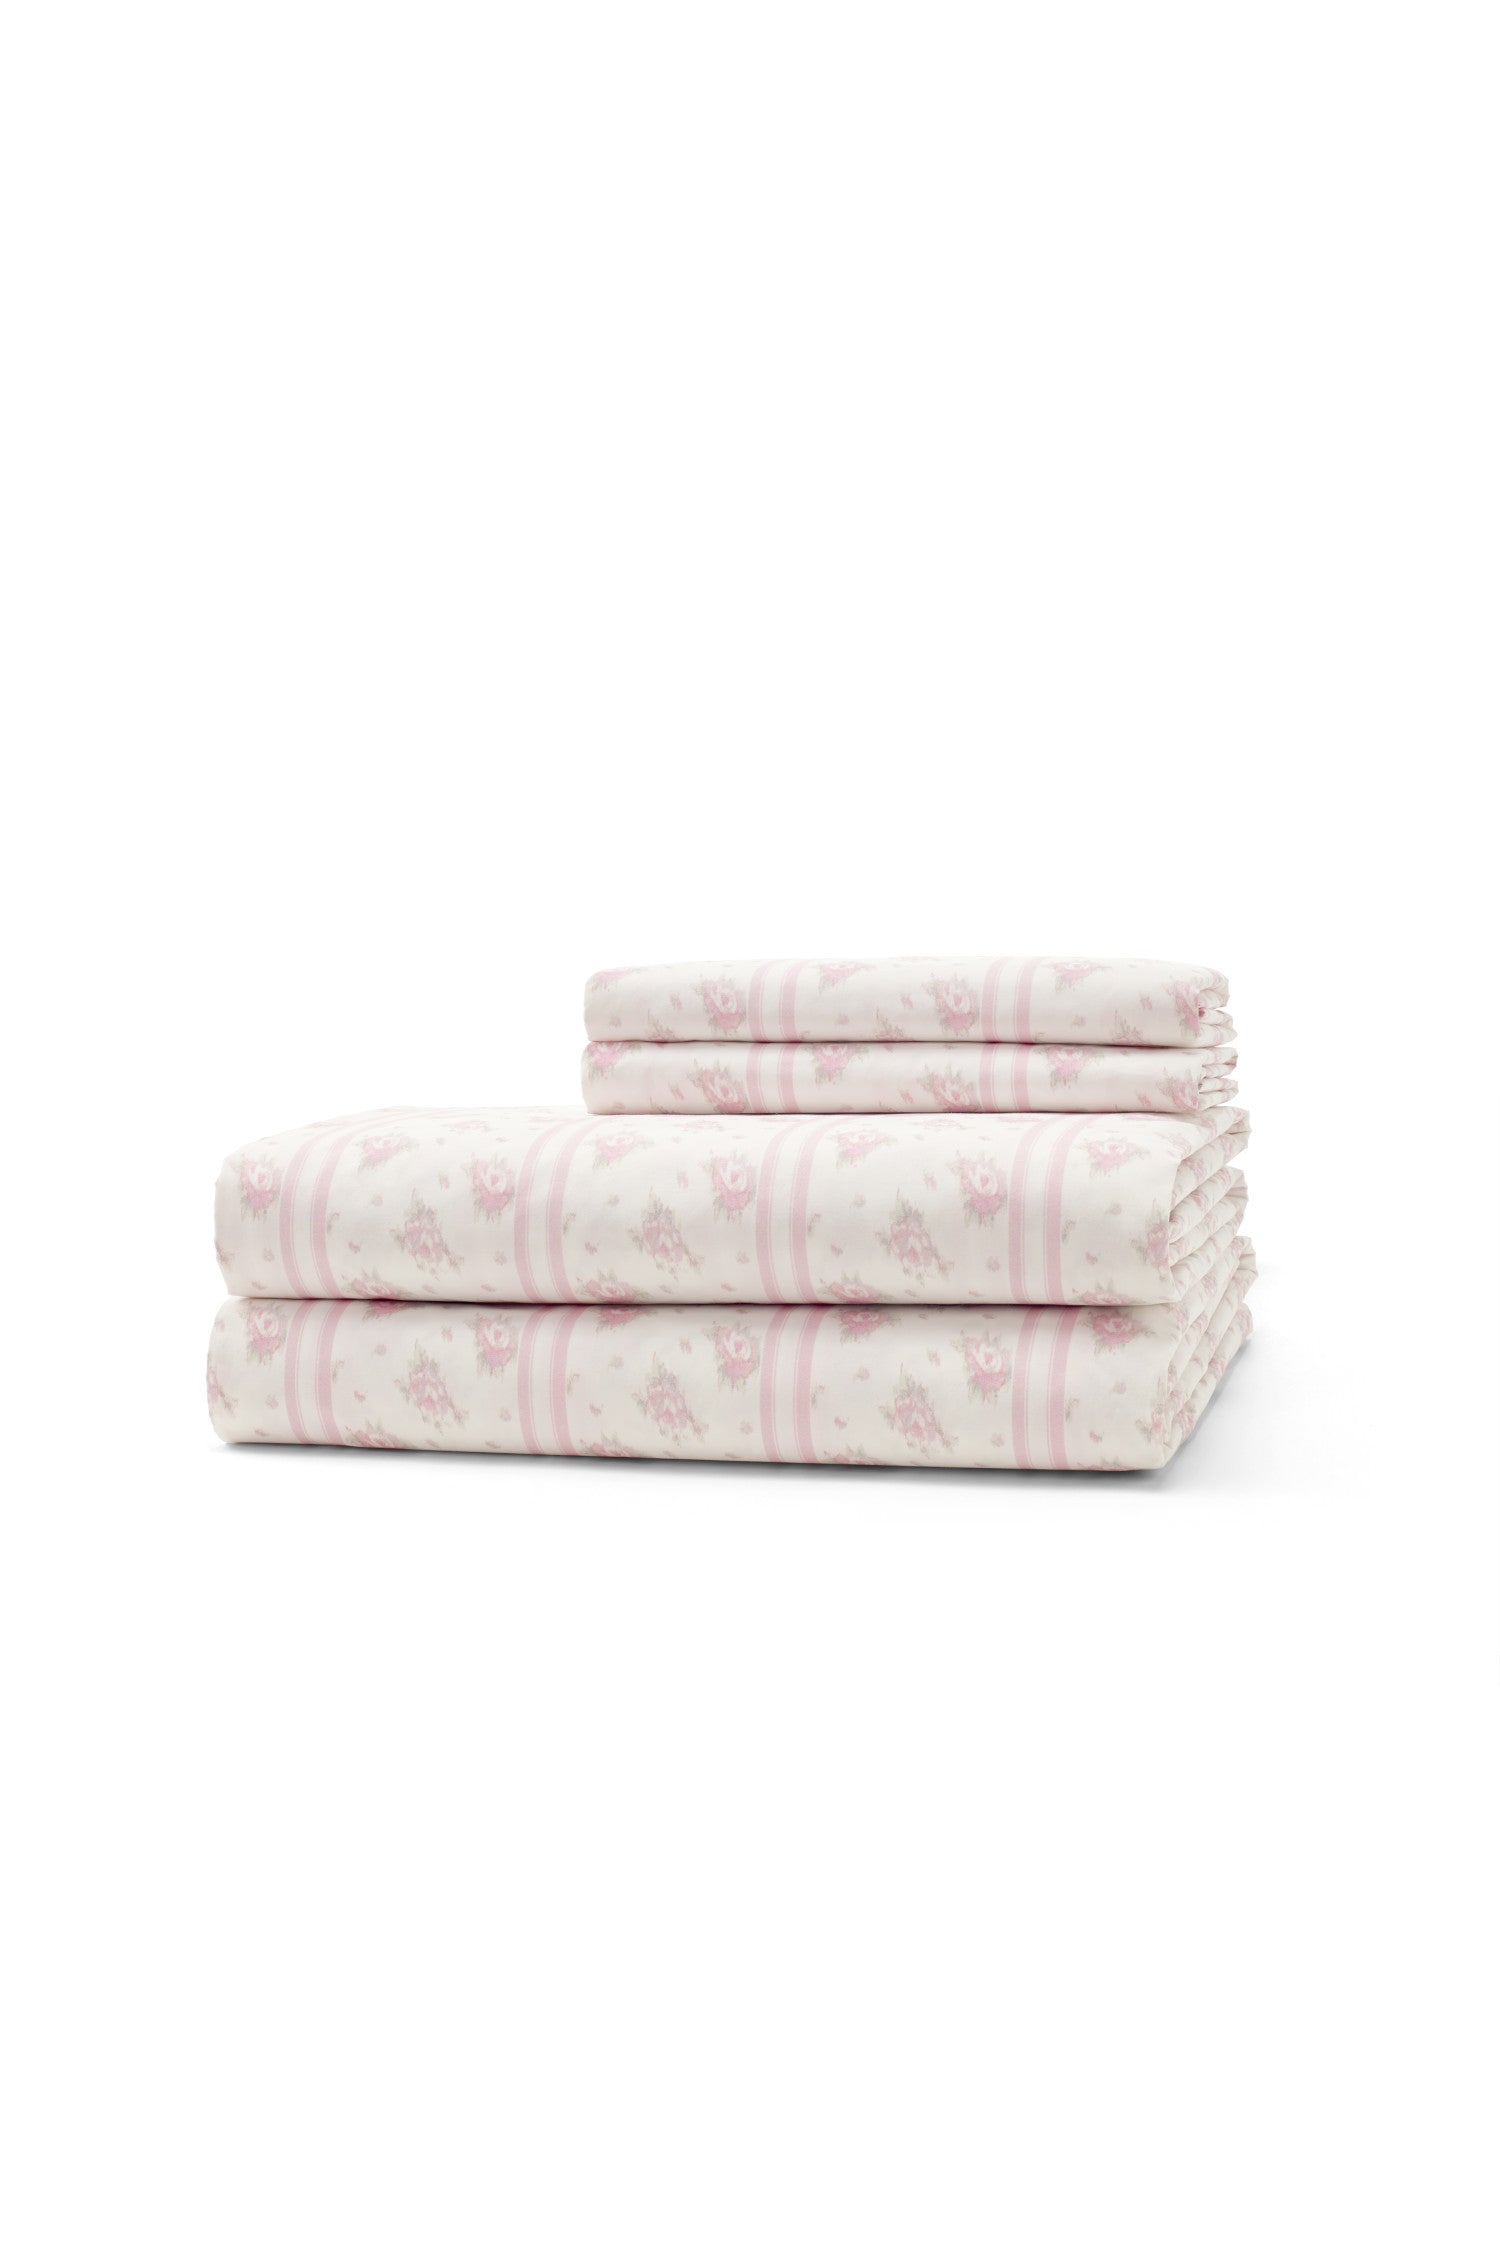 Pink floral sheet set